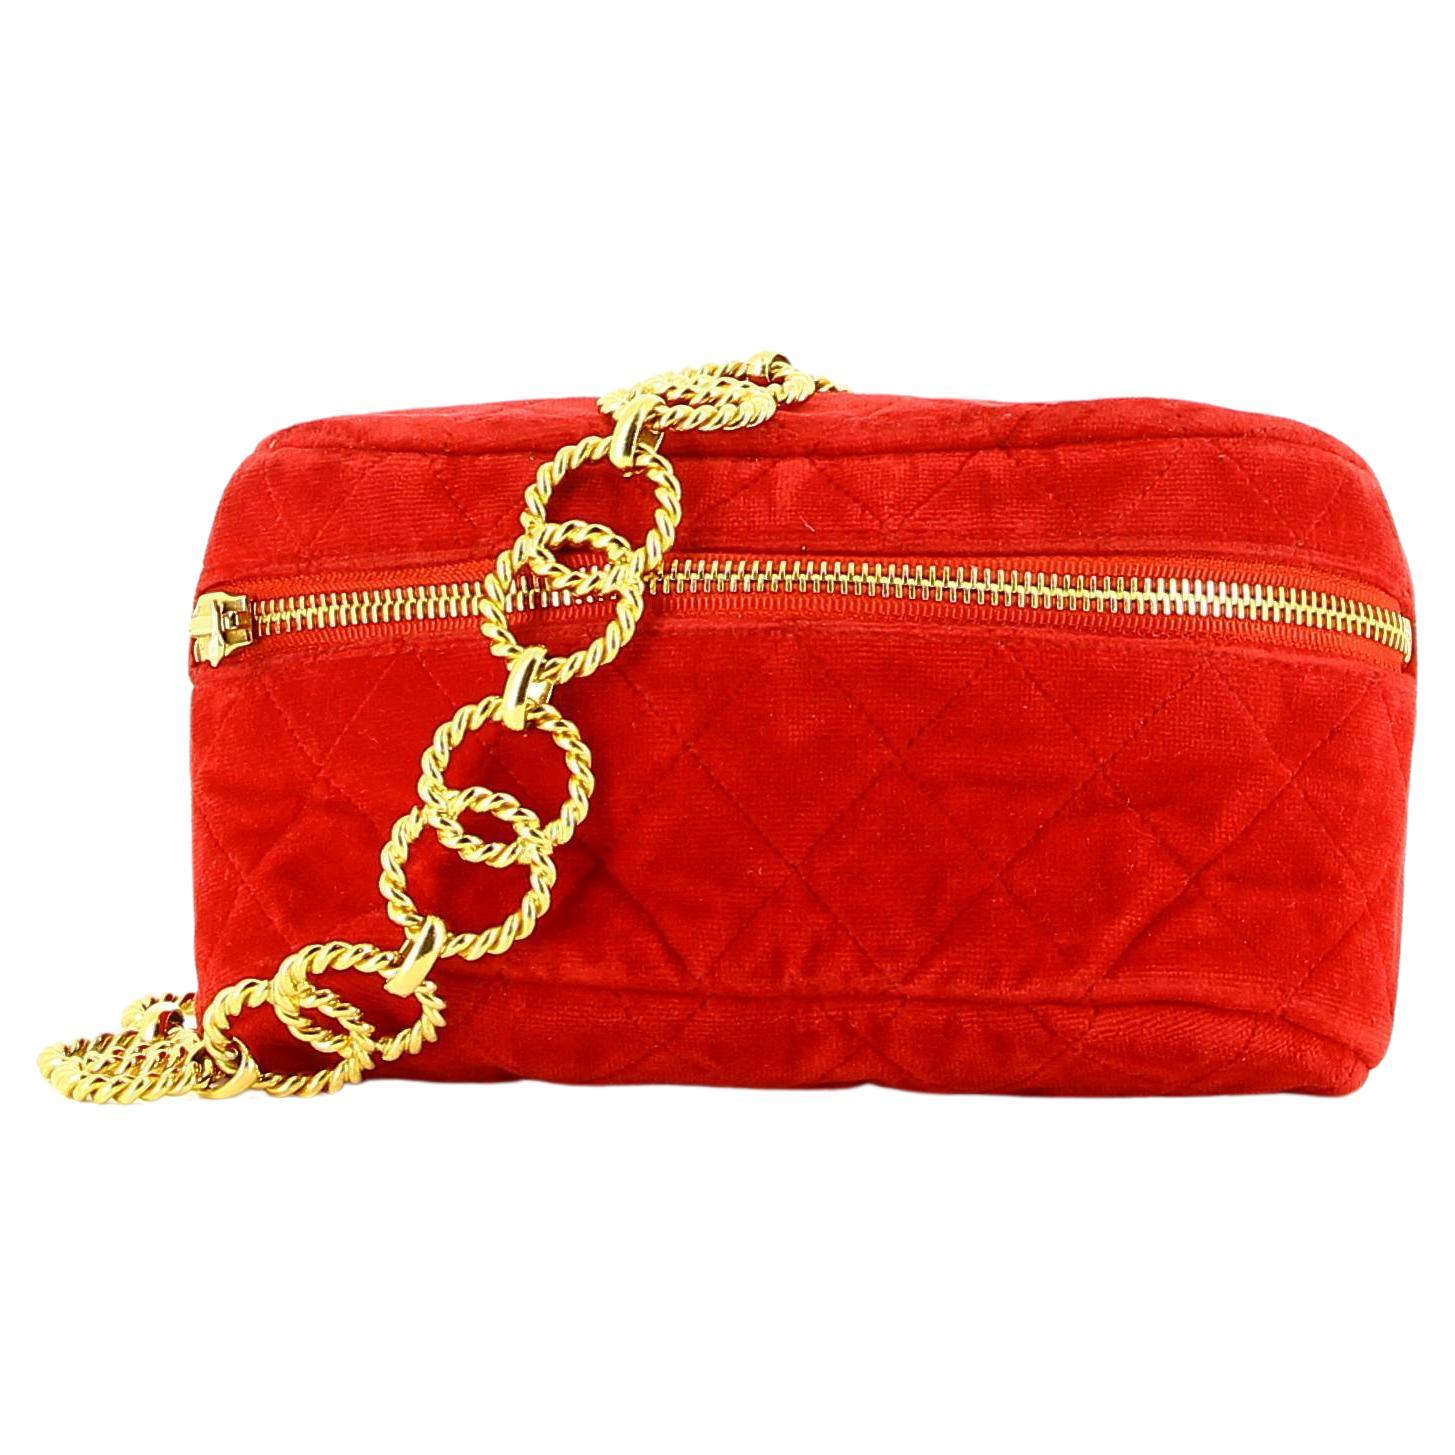 Chanel 1991 Vintage Red Velvet Quilted Medallion Fanny Pack Waist Belt Bag Rare

1991  {VINTAGE 32 Years}
Gold hardware
Red Quilted Velvet
Lambskin lined
Adjustable clasp belt with max 40